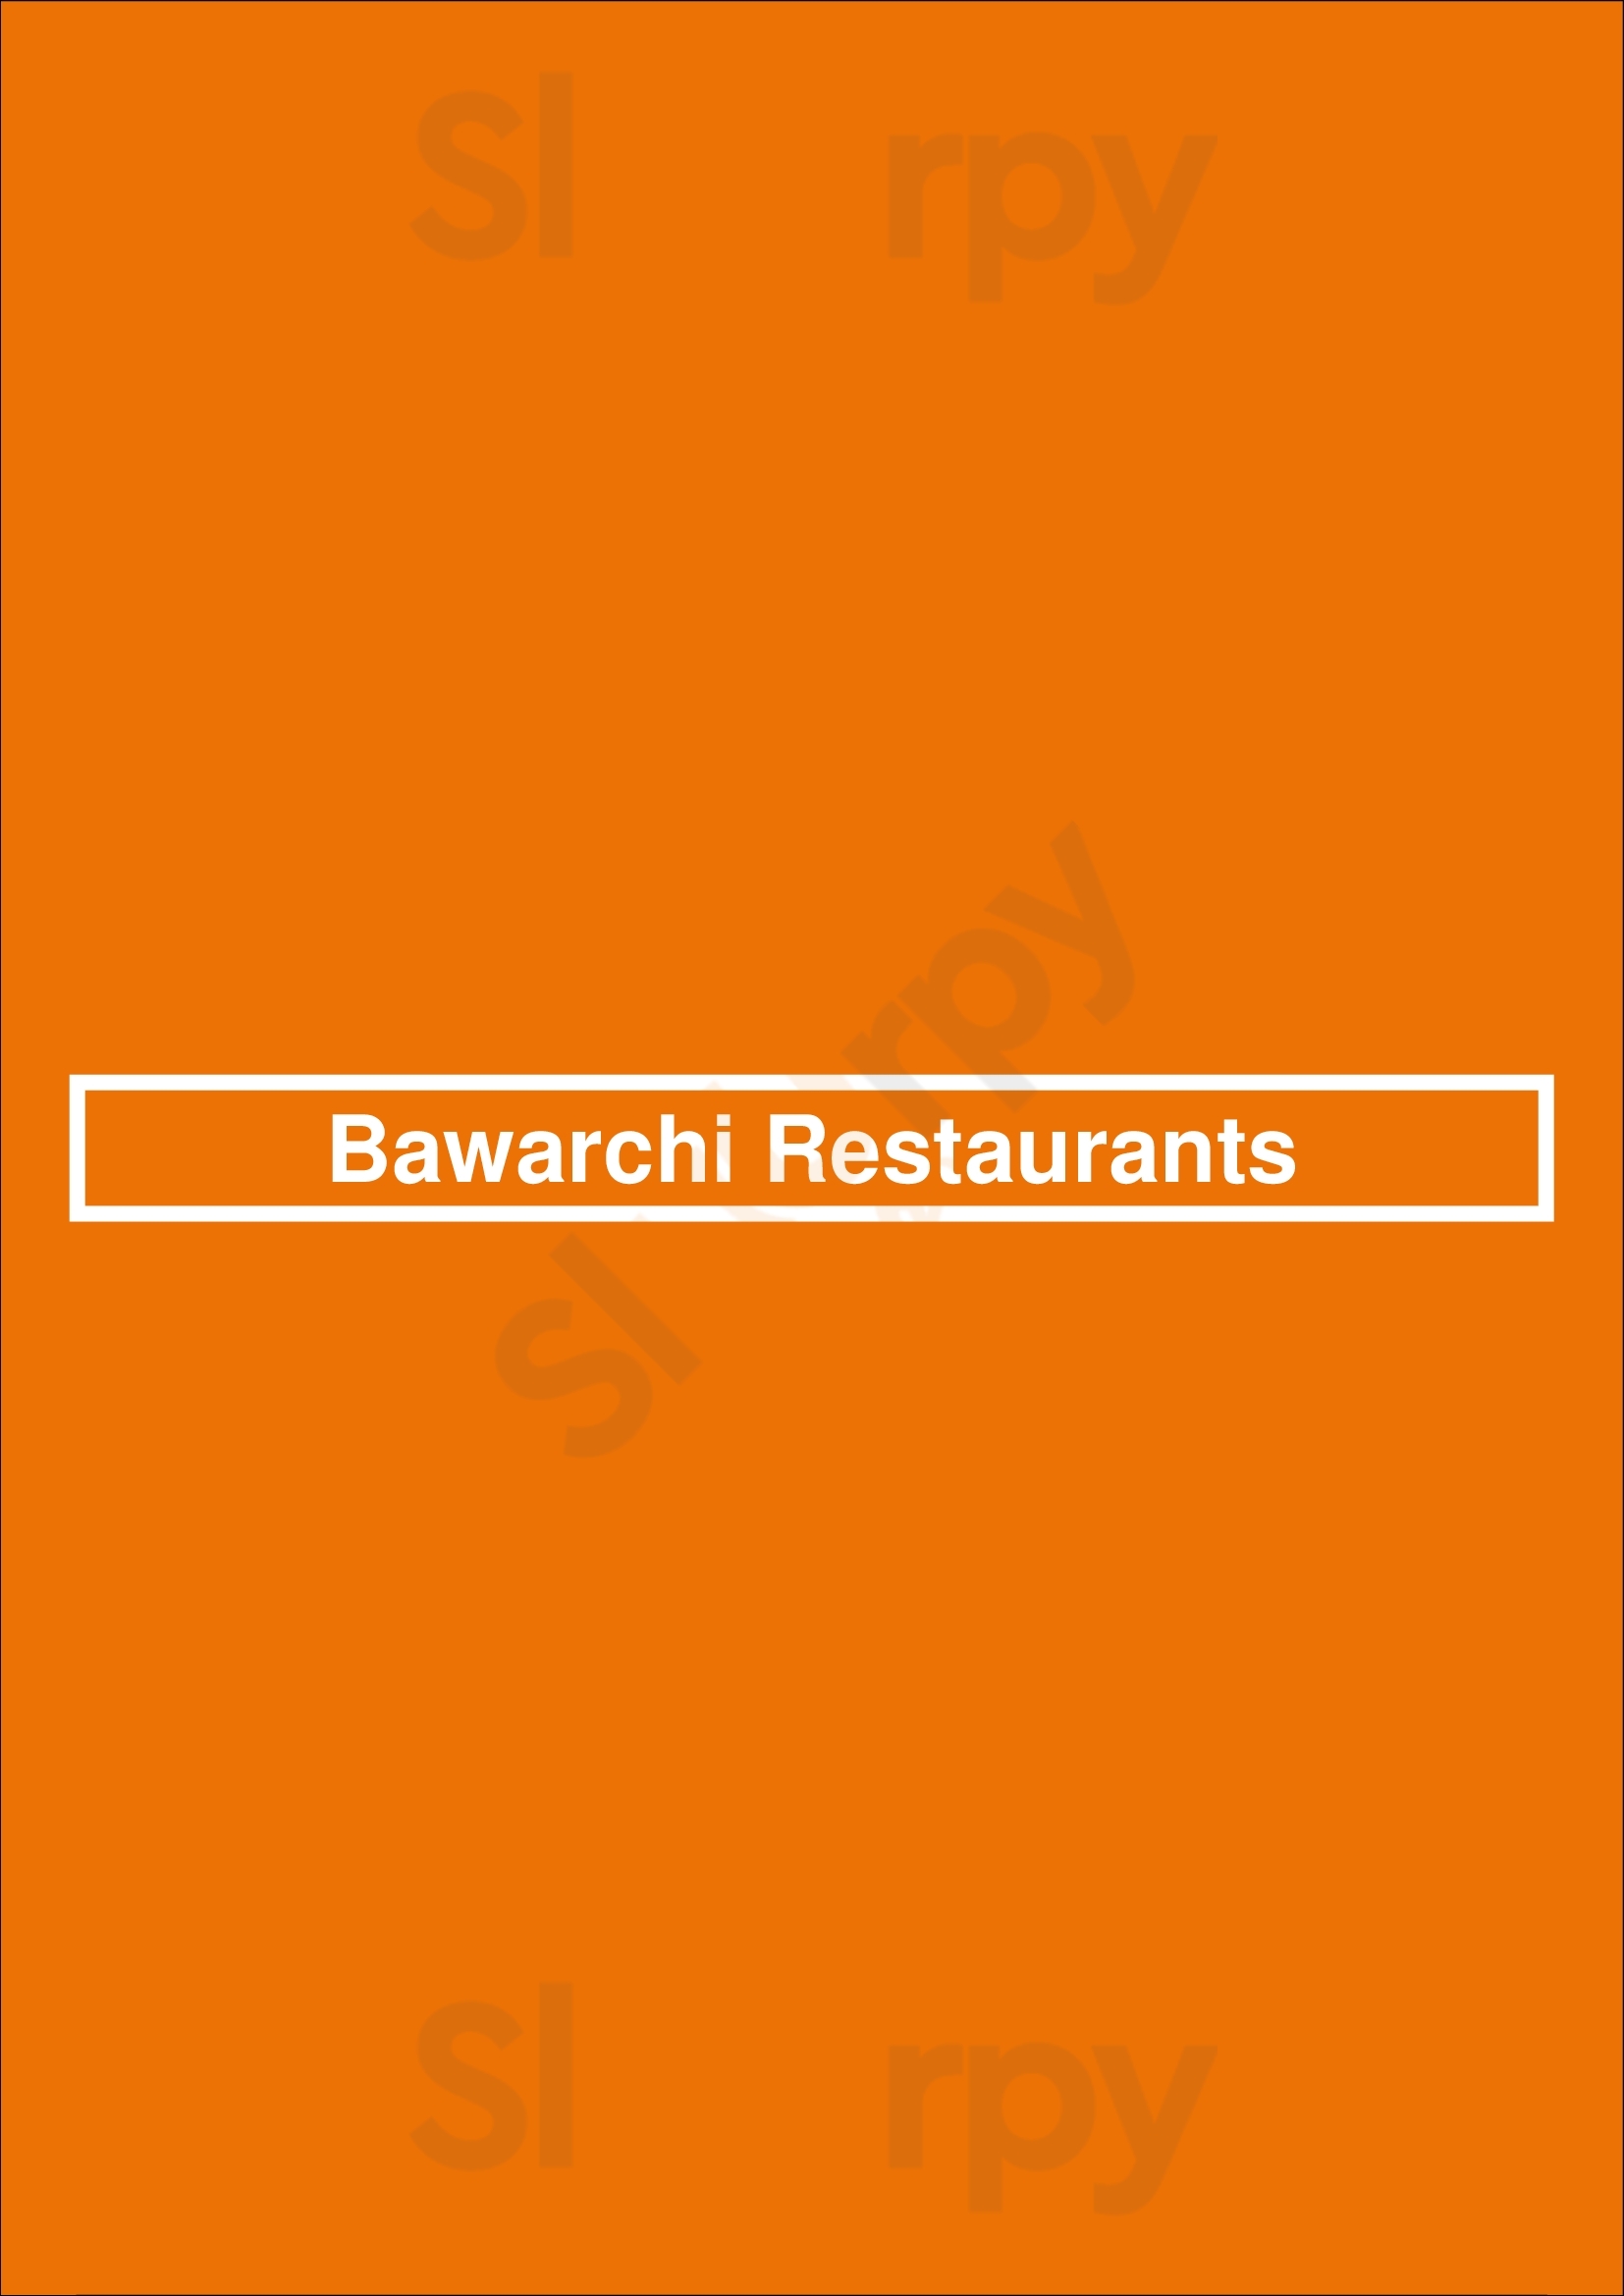 Bawarchi Restaurants Plano Menu - 1